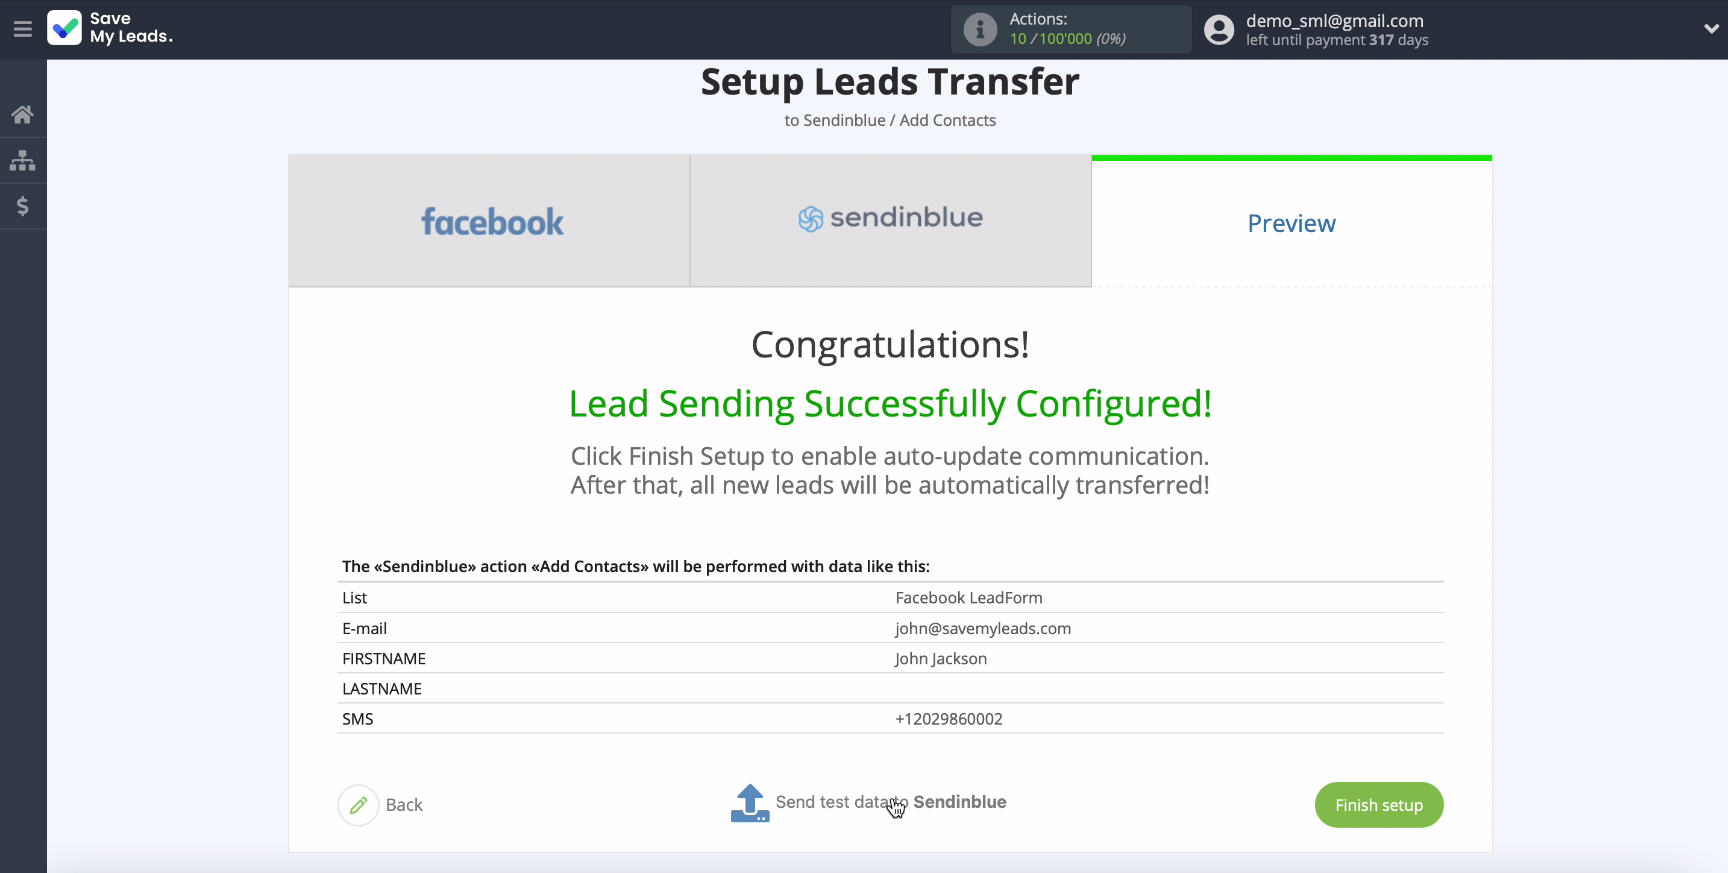 Facebook and Sendinblue integration | Sending test data